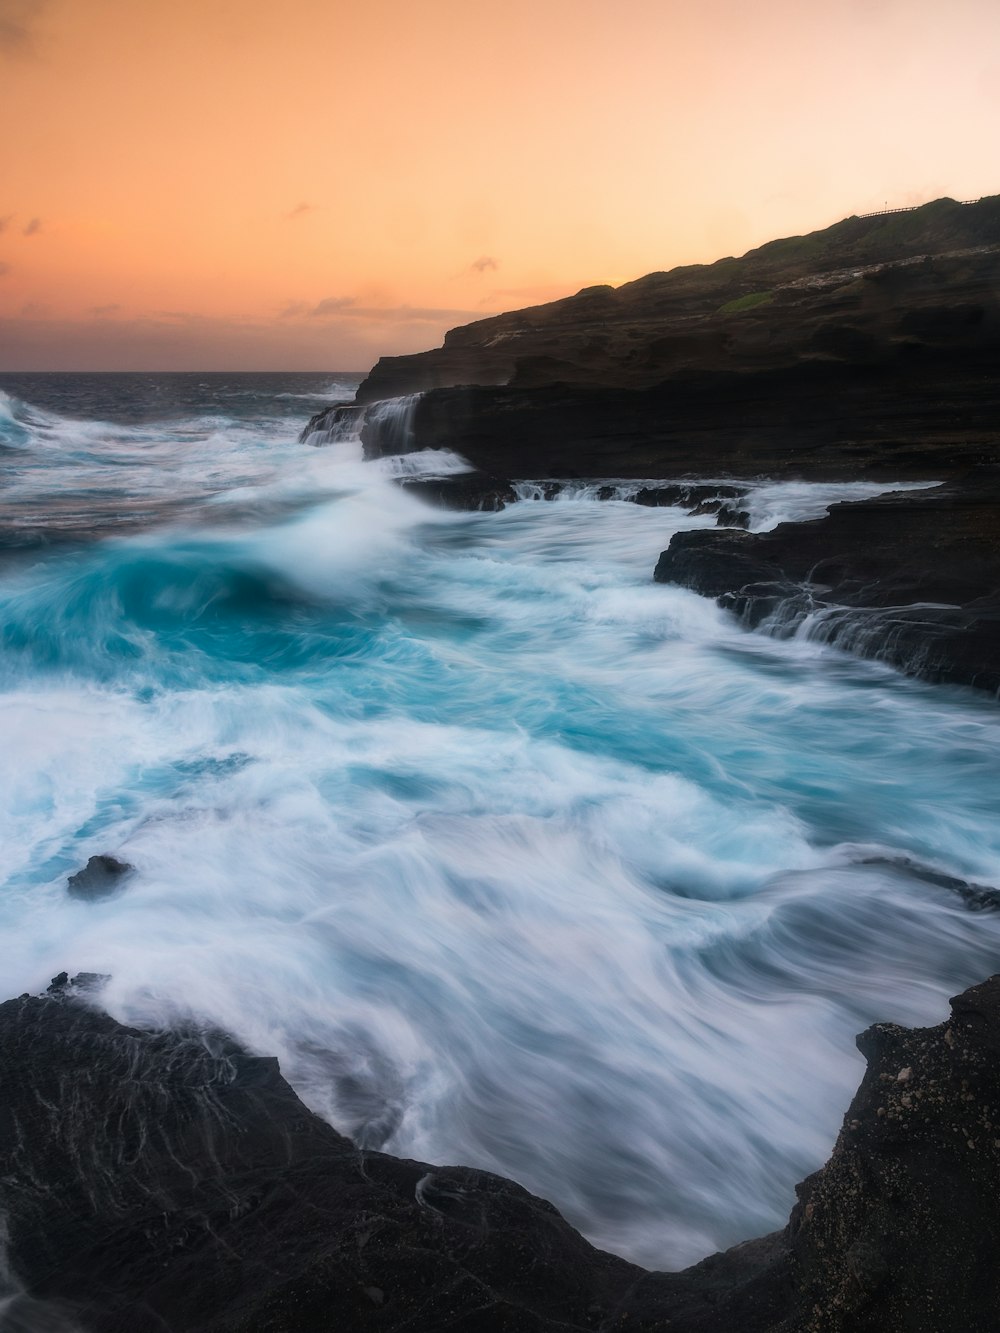 ocean waves crashing on rock formation during sunset